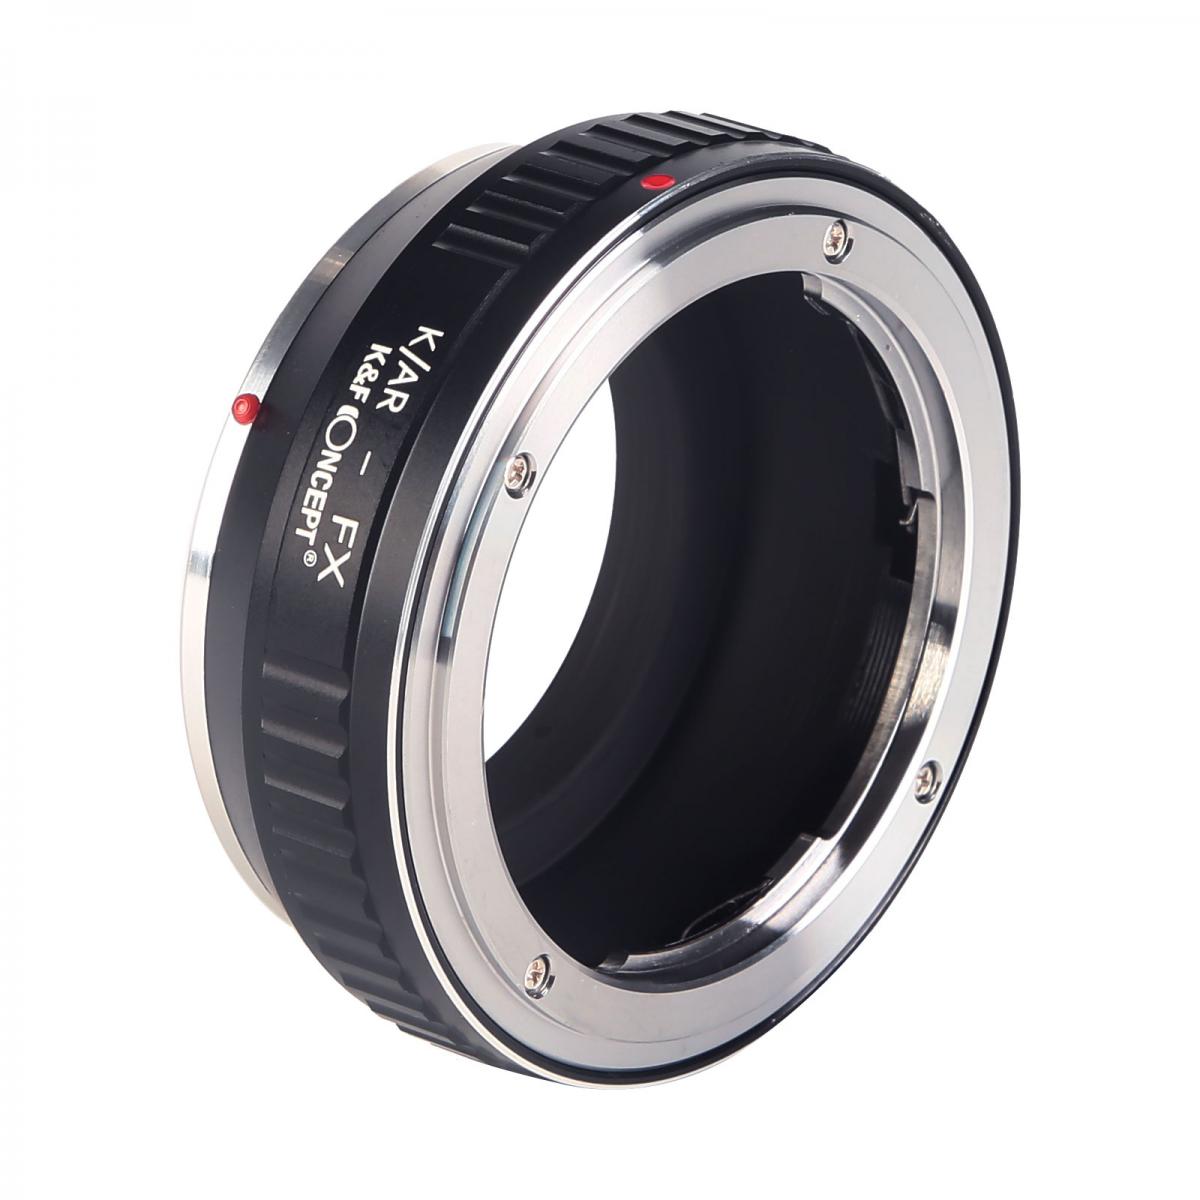 Lens Adapters for Fuji X Cameras